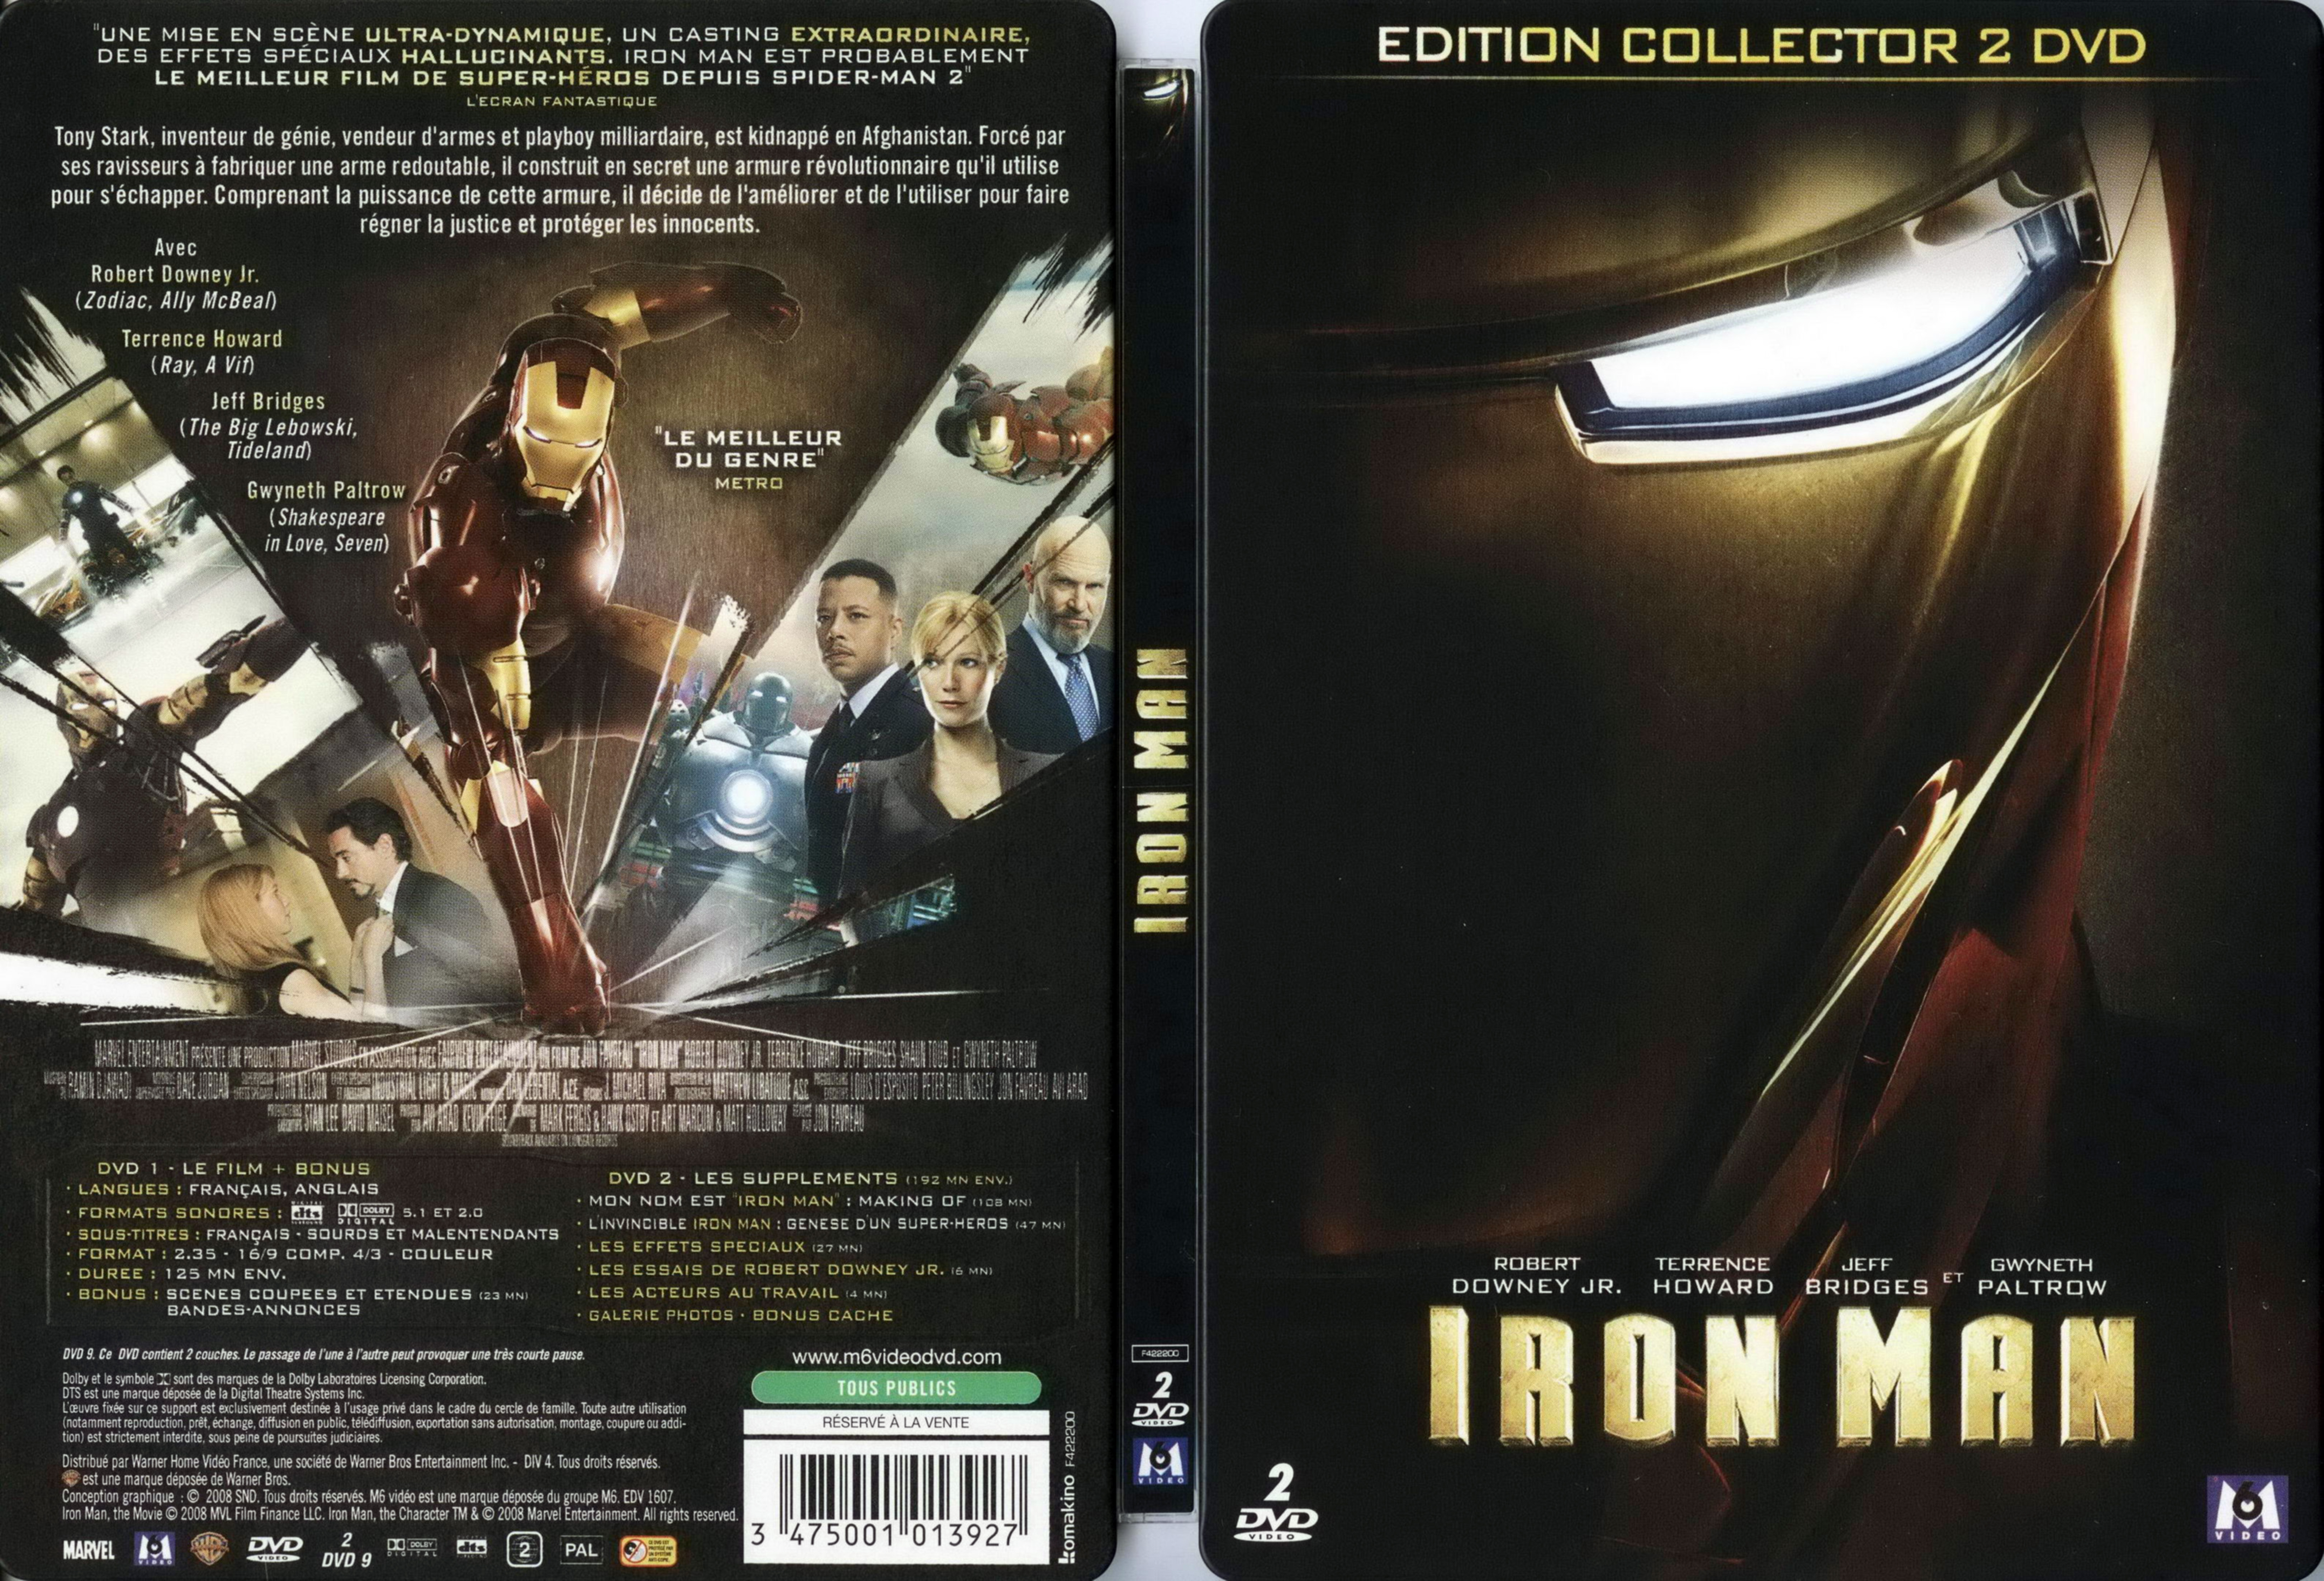 Jaquette DVD Iron man v2